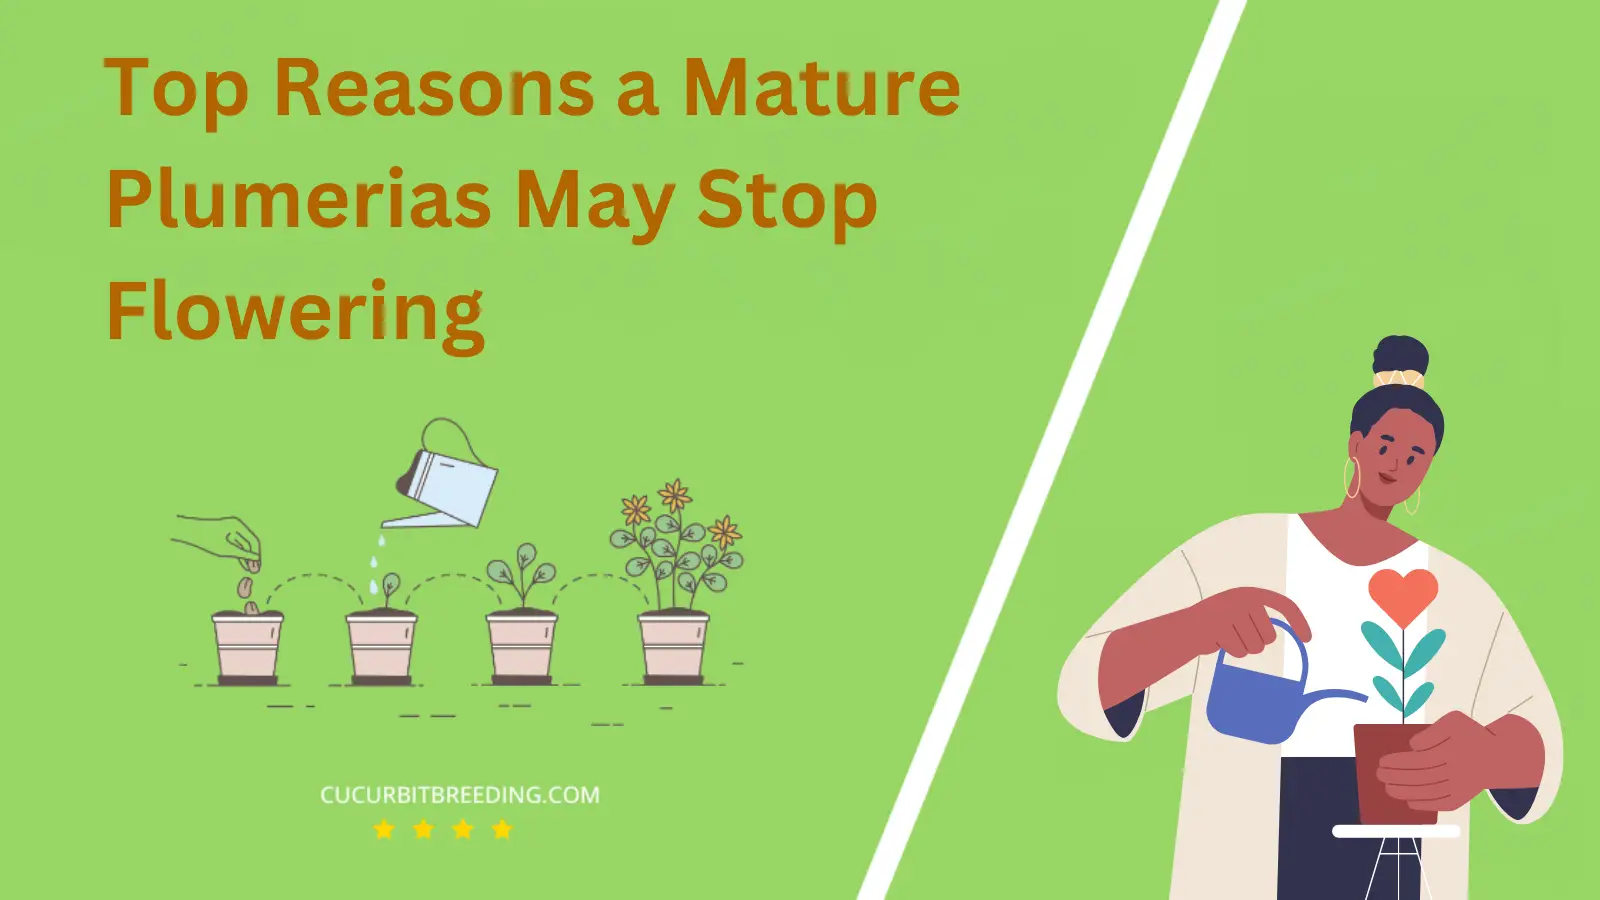 Top Reasons a Mature Plumerias May Stop Flowering